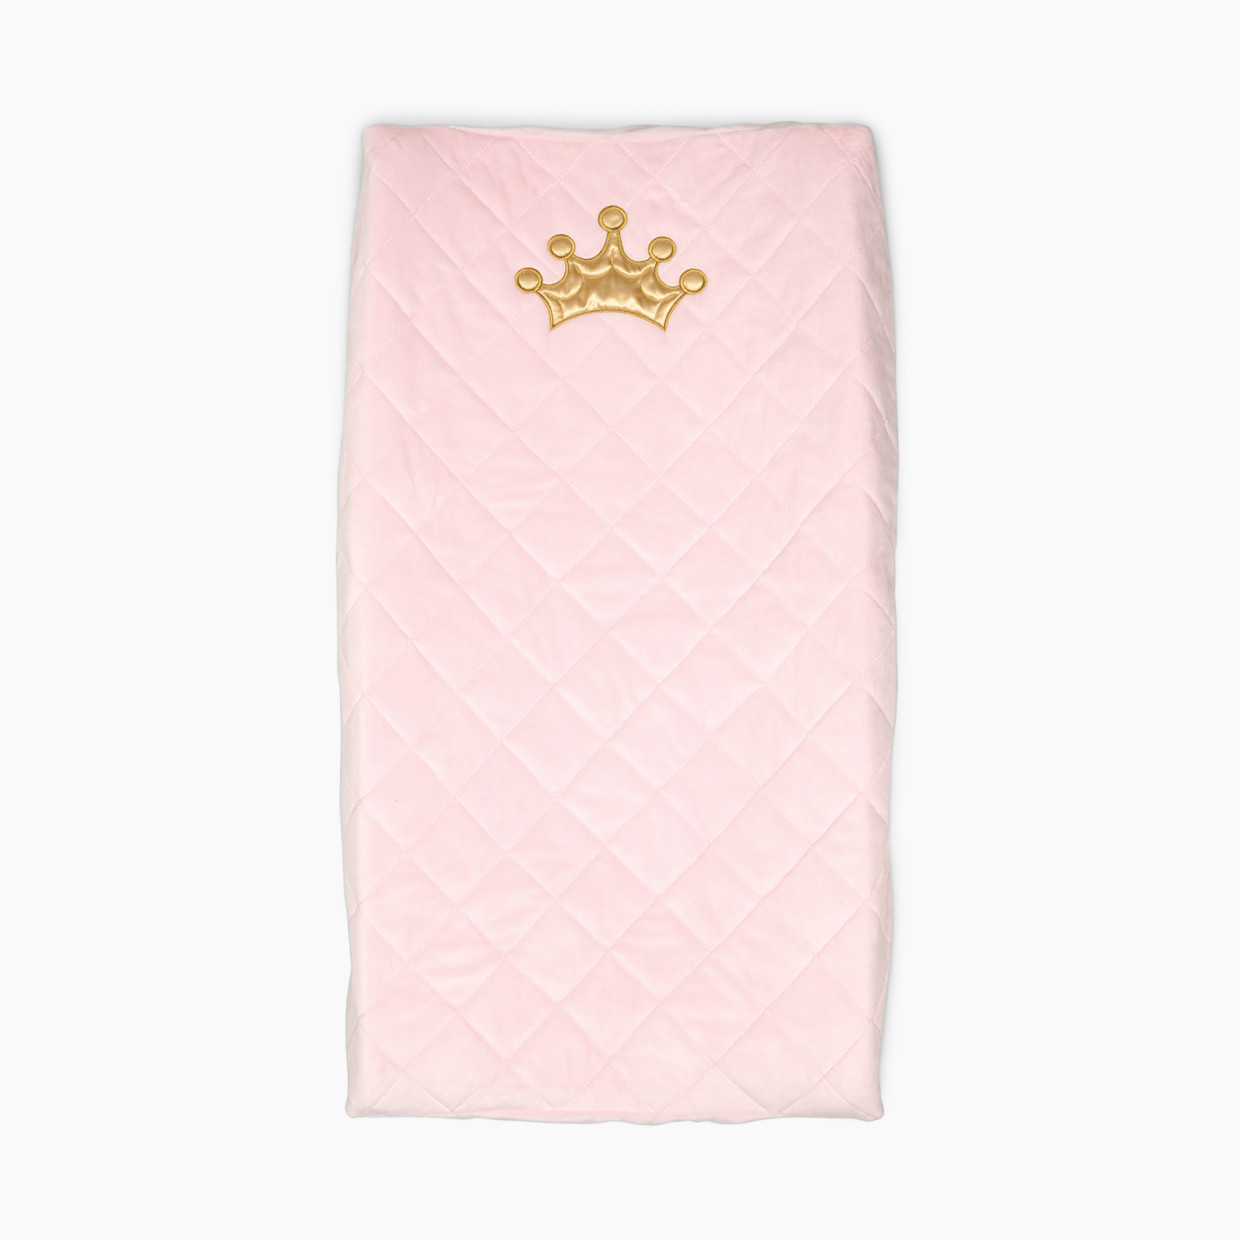 Boppy Preferred Changing Pad Cover - Pink Royal Princess.